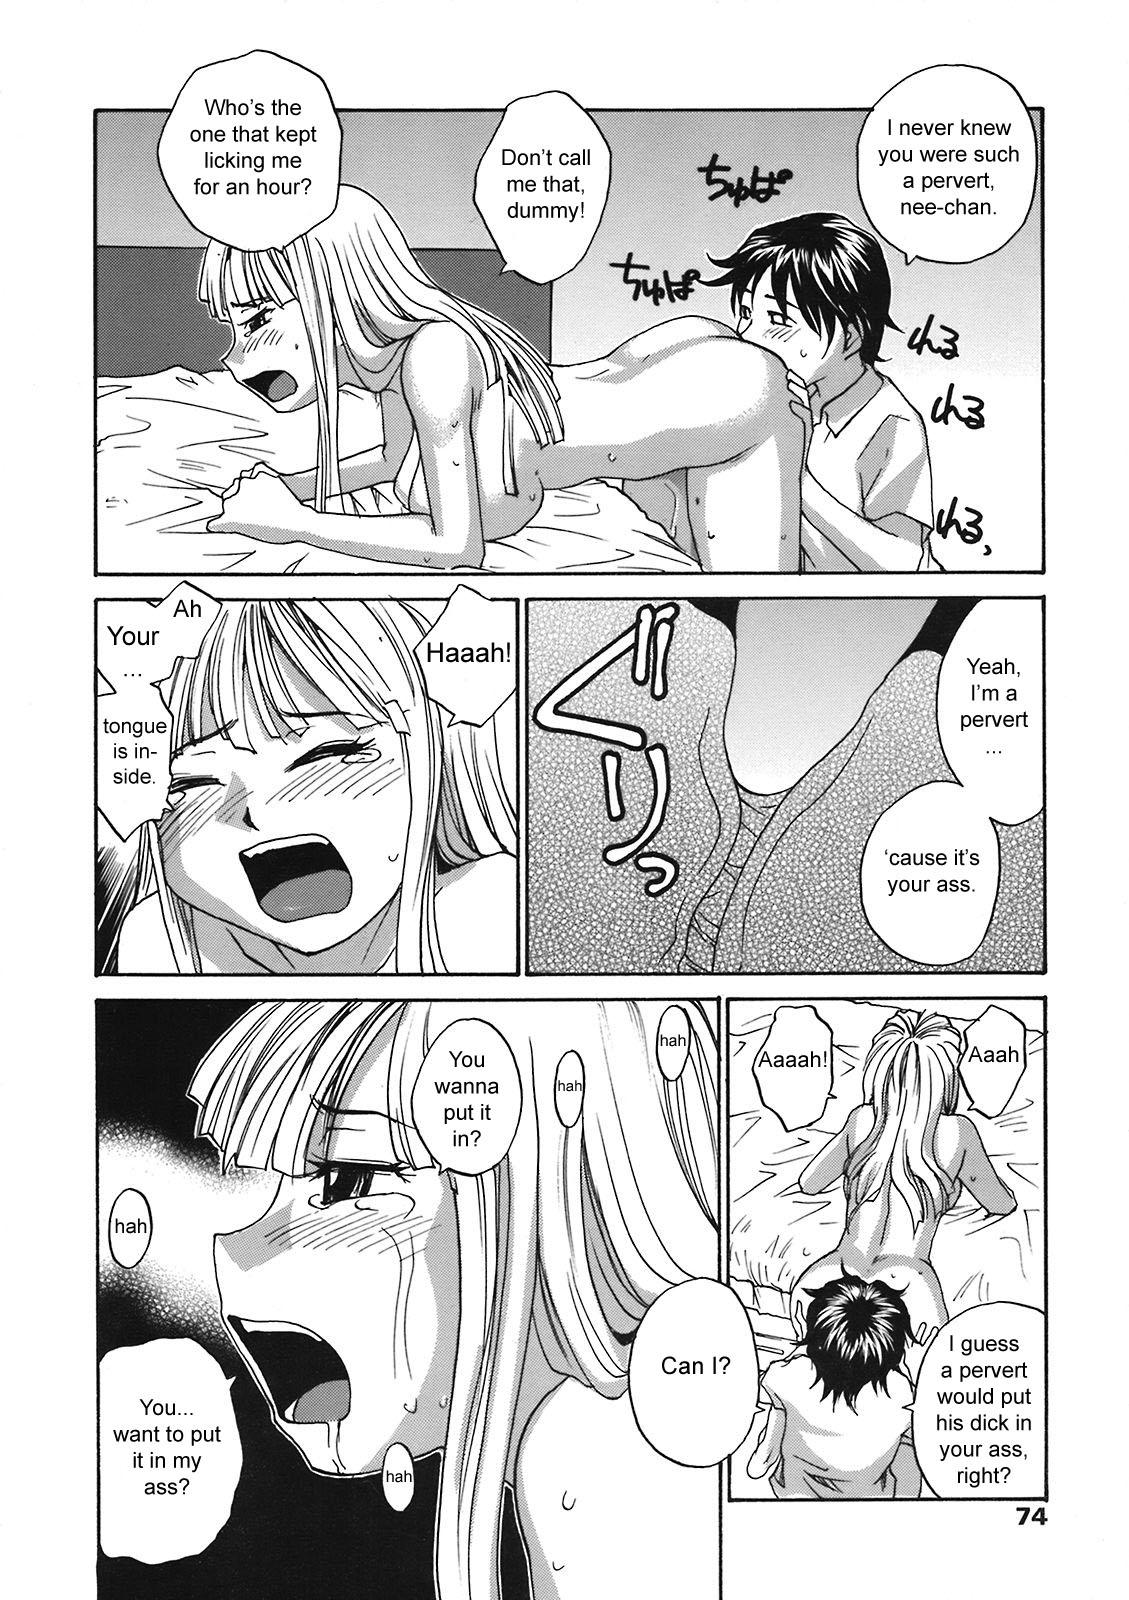 Plug Back to Nee-chan Str8 - Page 8